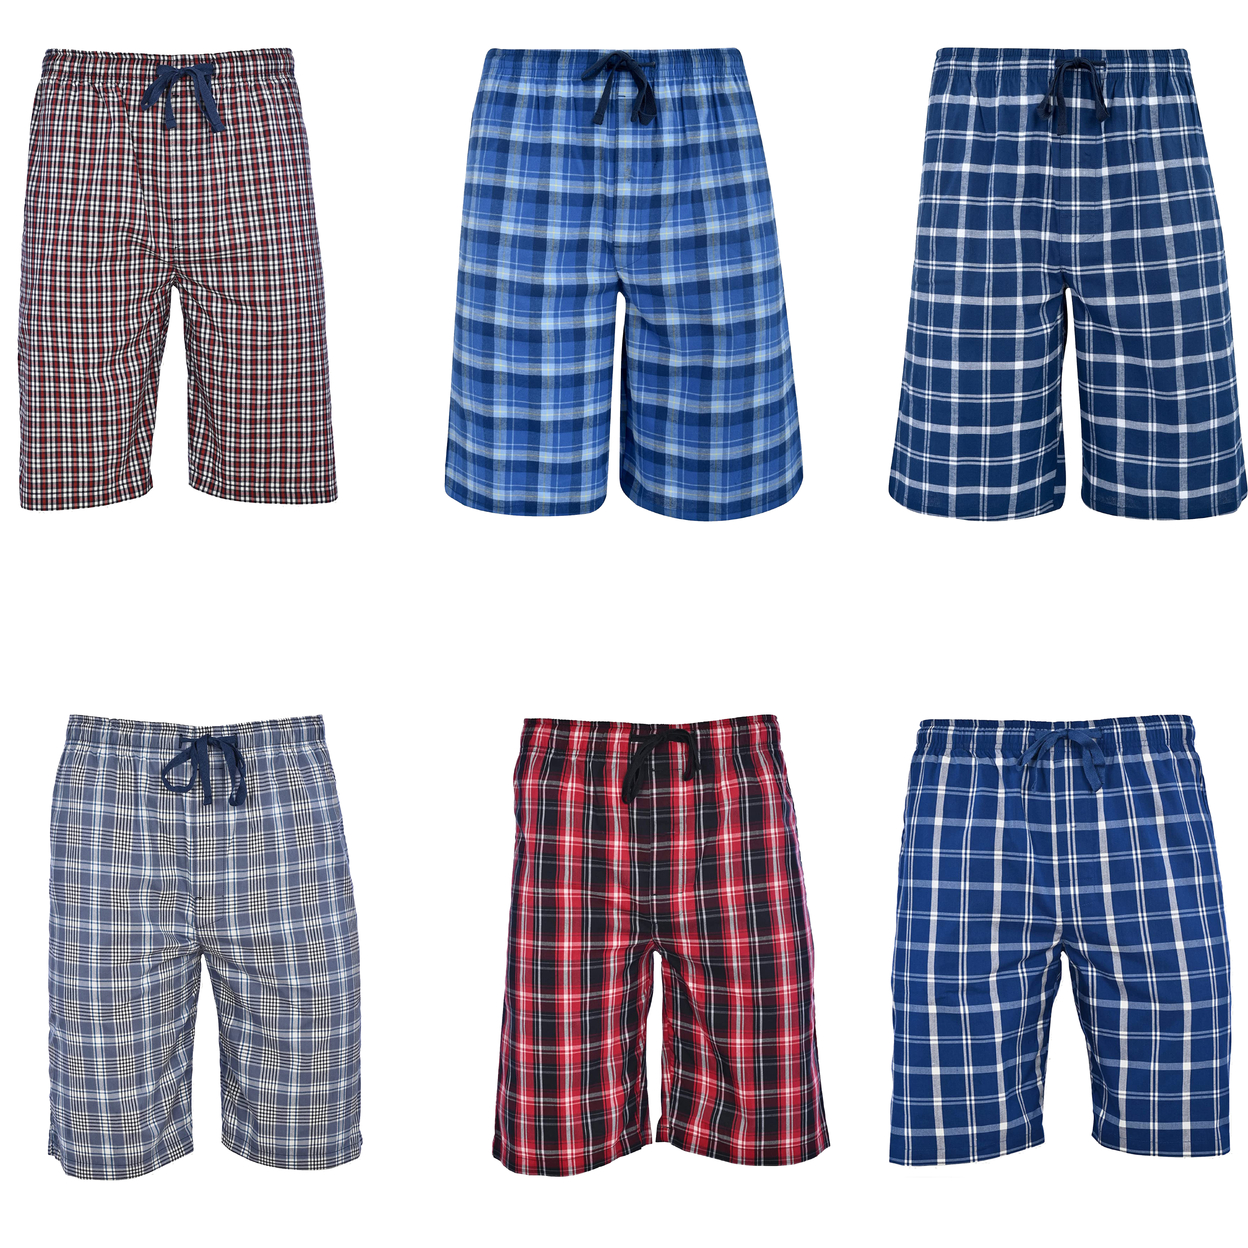 2-Pack: Men's Ultra Soft Plaid Lounge Pajama Sleep Wear Shorts - Black & Tan, X-large